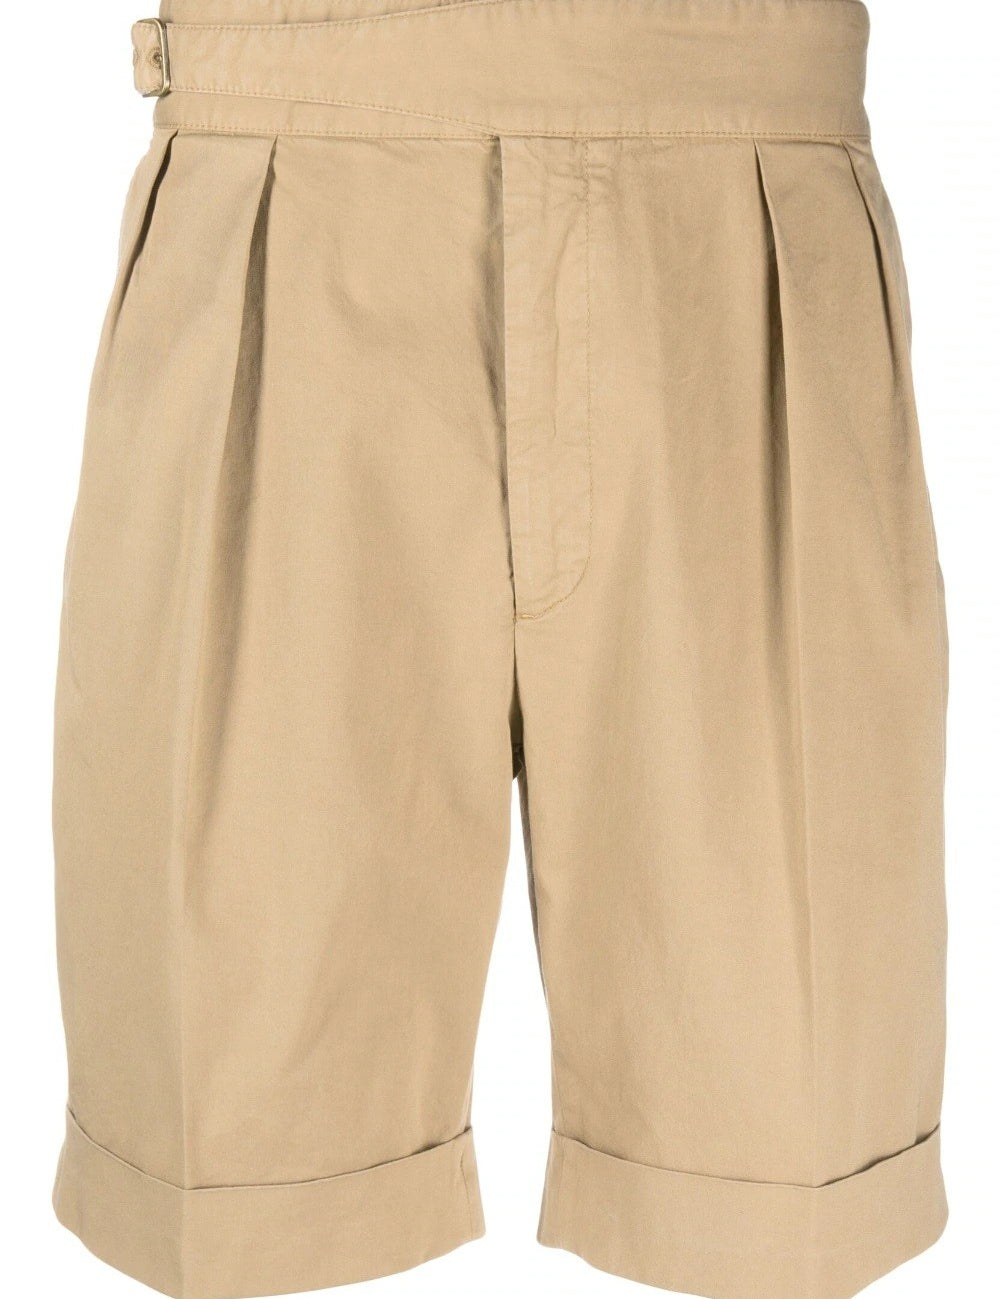 byron-pleated-shorts.jpg